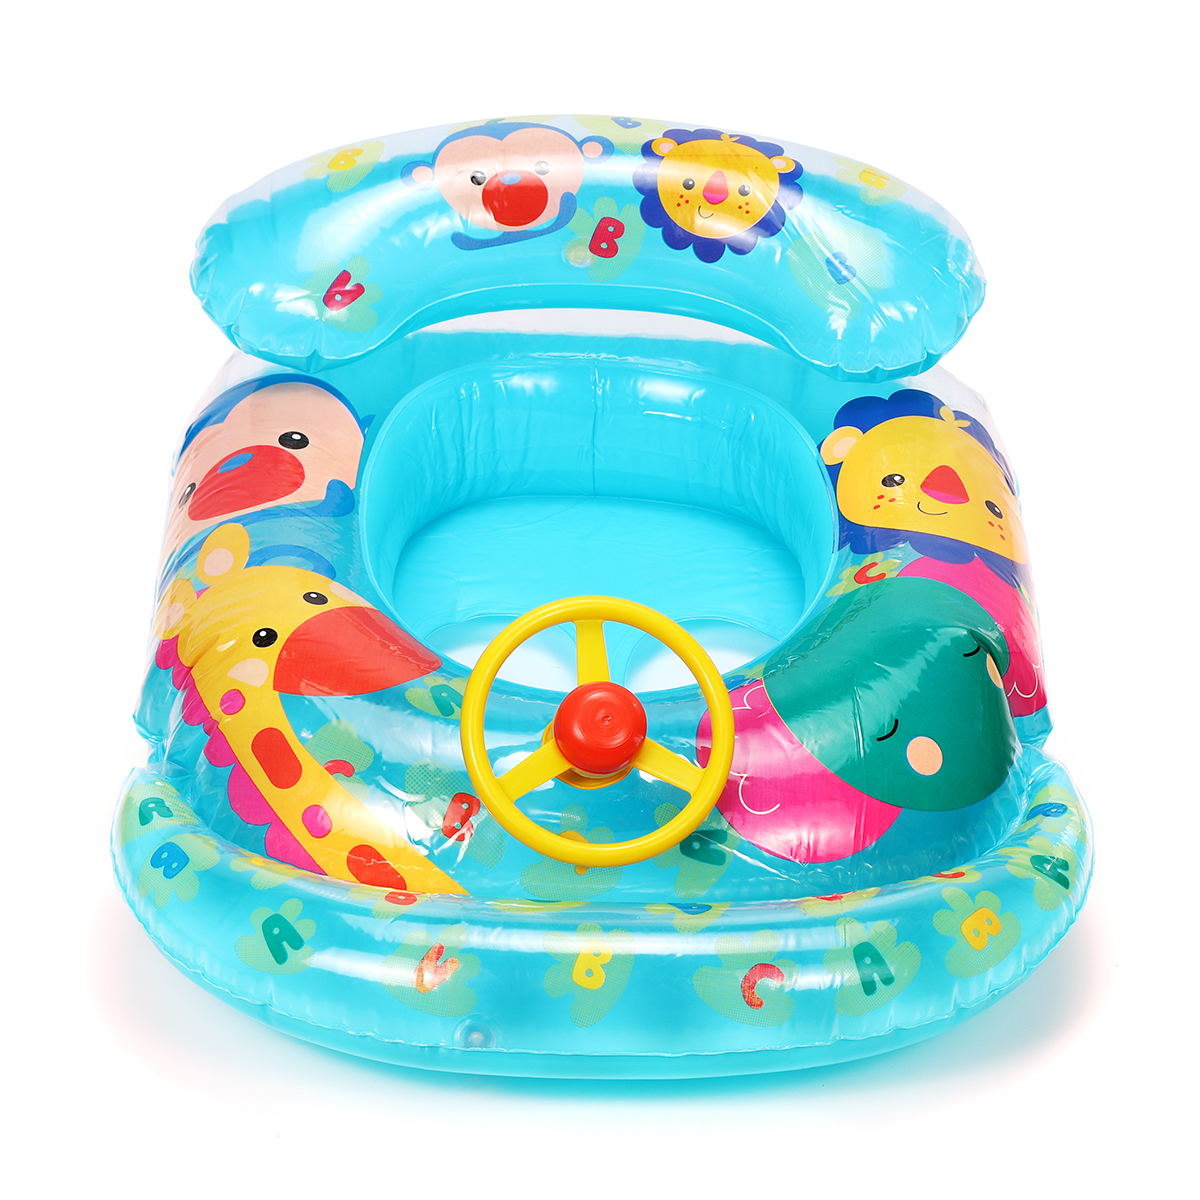 Inflatable-Sunshade-Kids-Float-Seat-Boat-Children-Swim-Swimming-Ring-Pool-Water-1568945-7